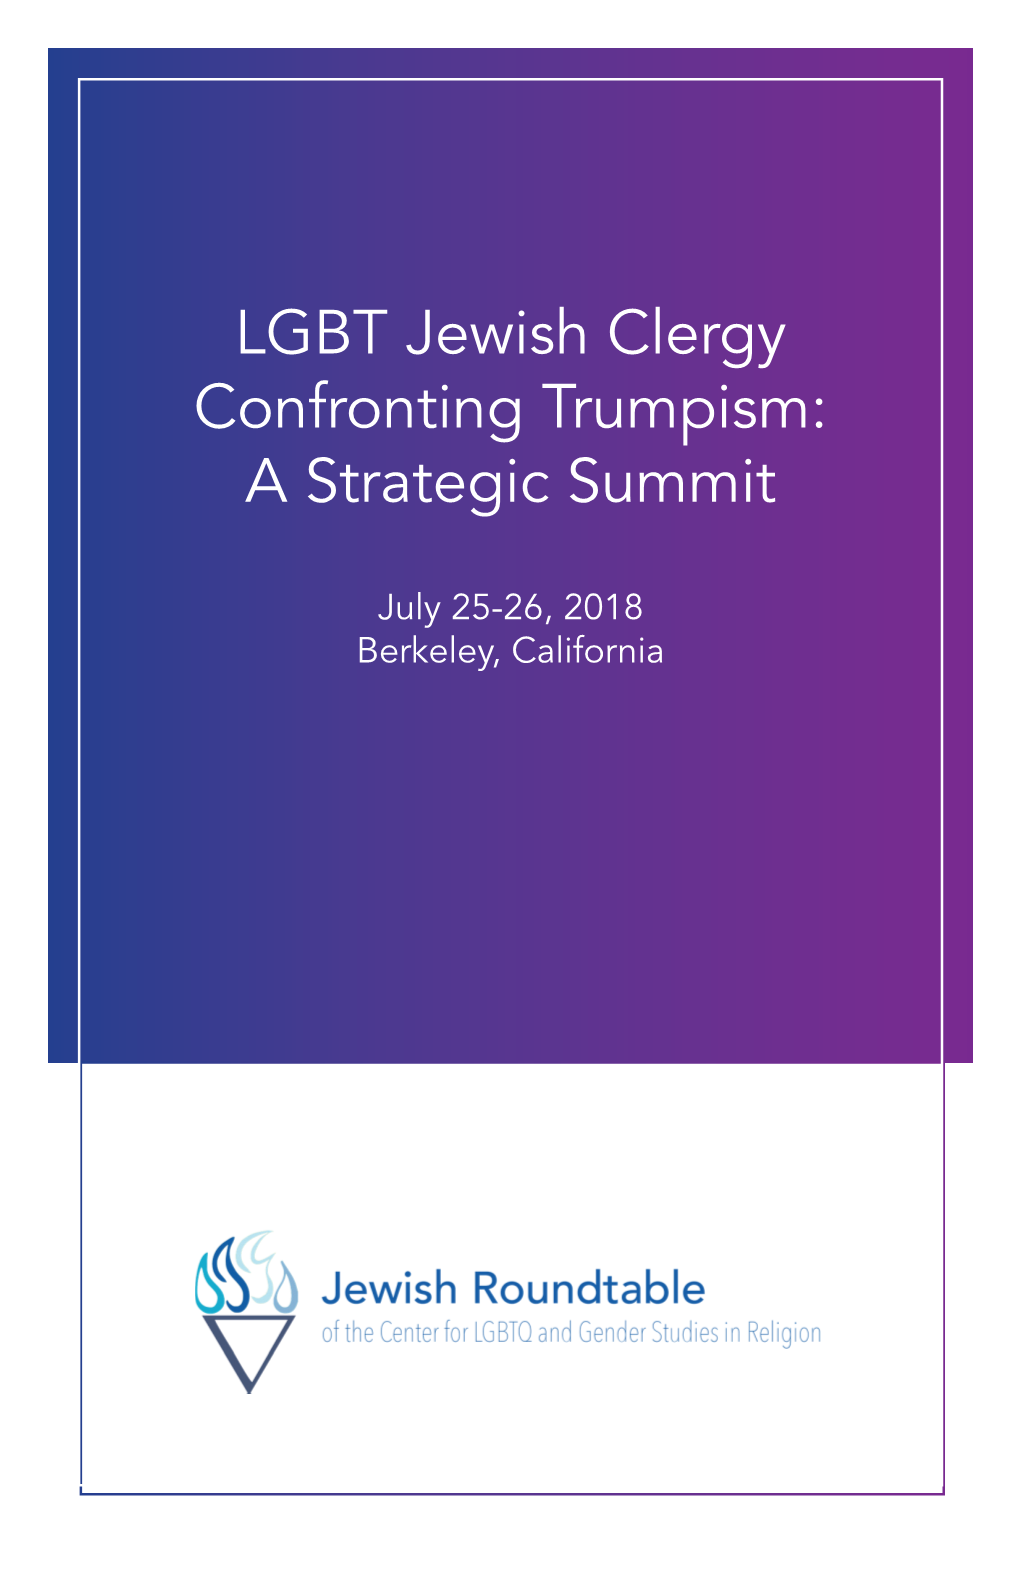 LGBT Jewish Clergy Confronting Trumpism: a Strategic Summit